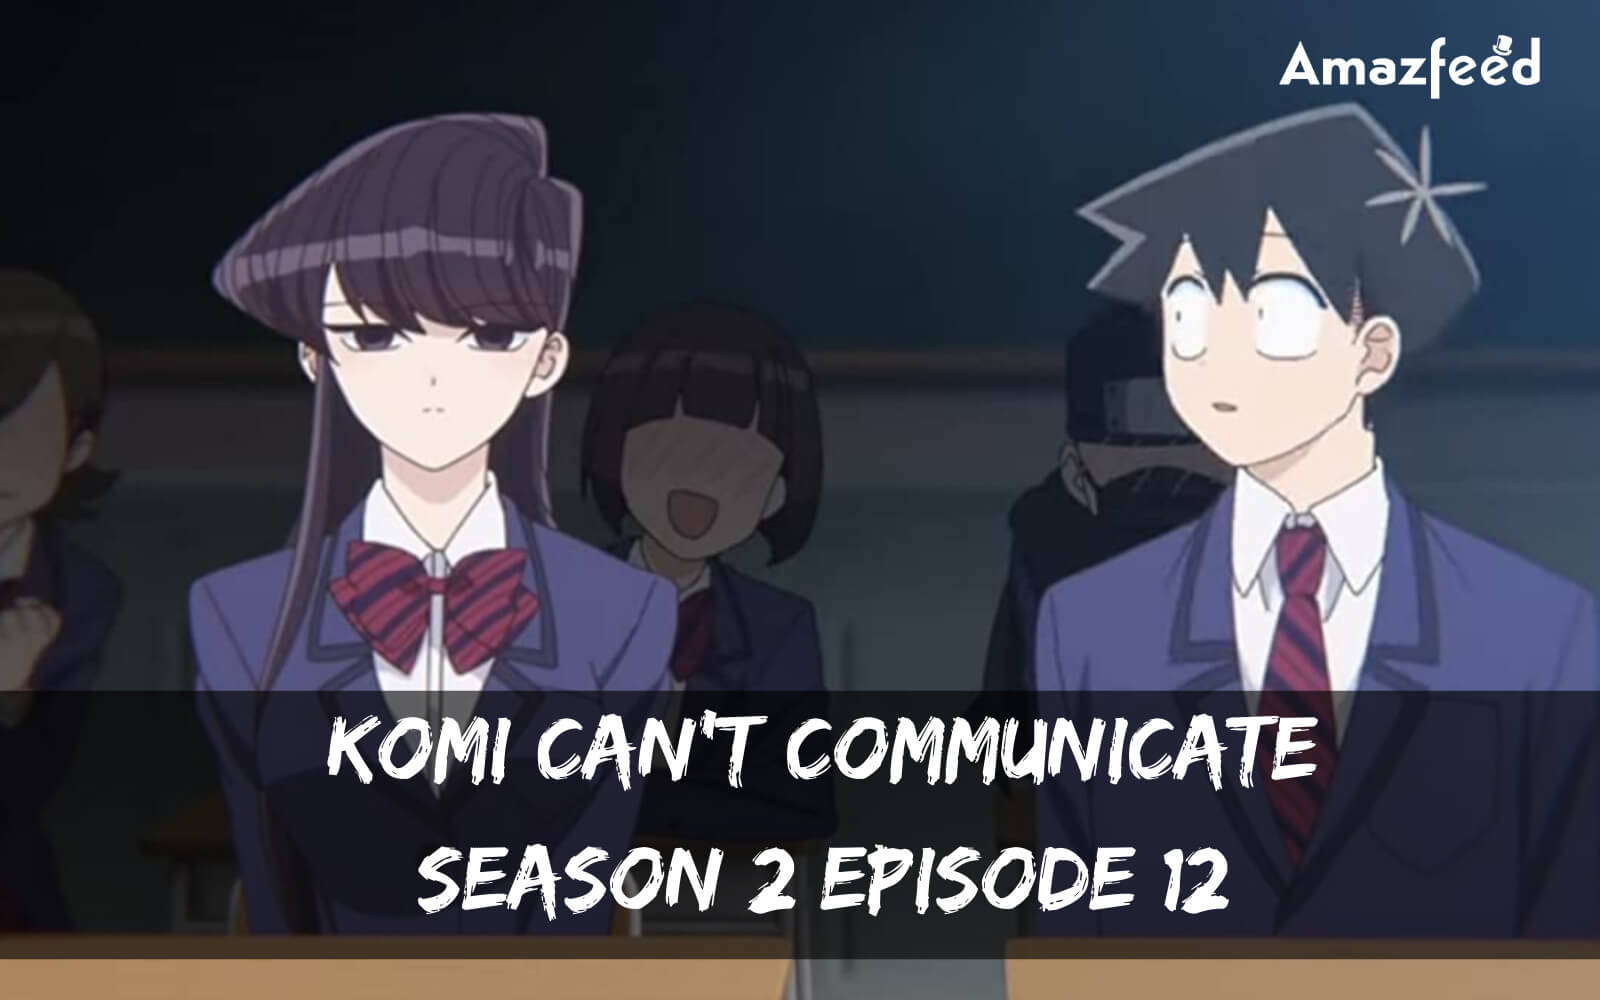 Komi Can’t Communicate Season 2 Episode 12 release date